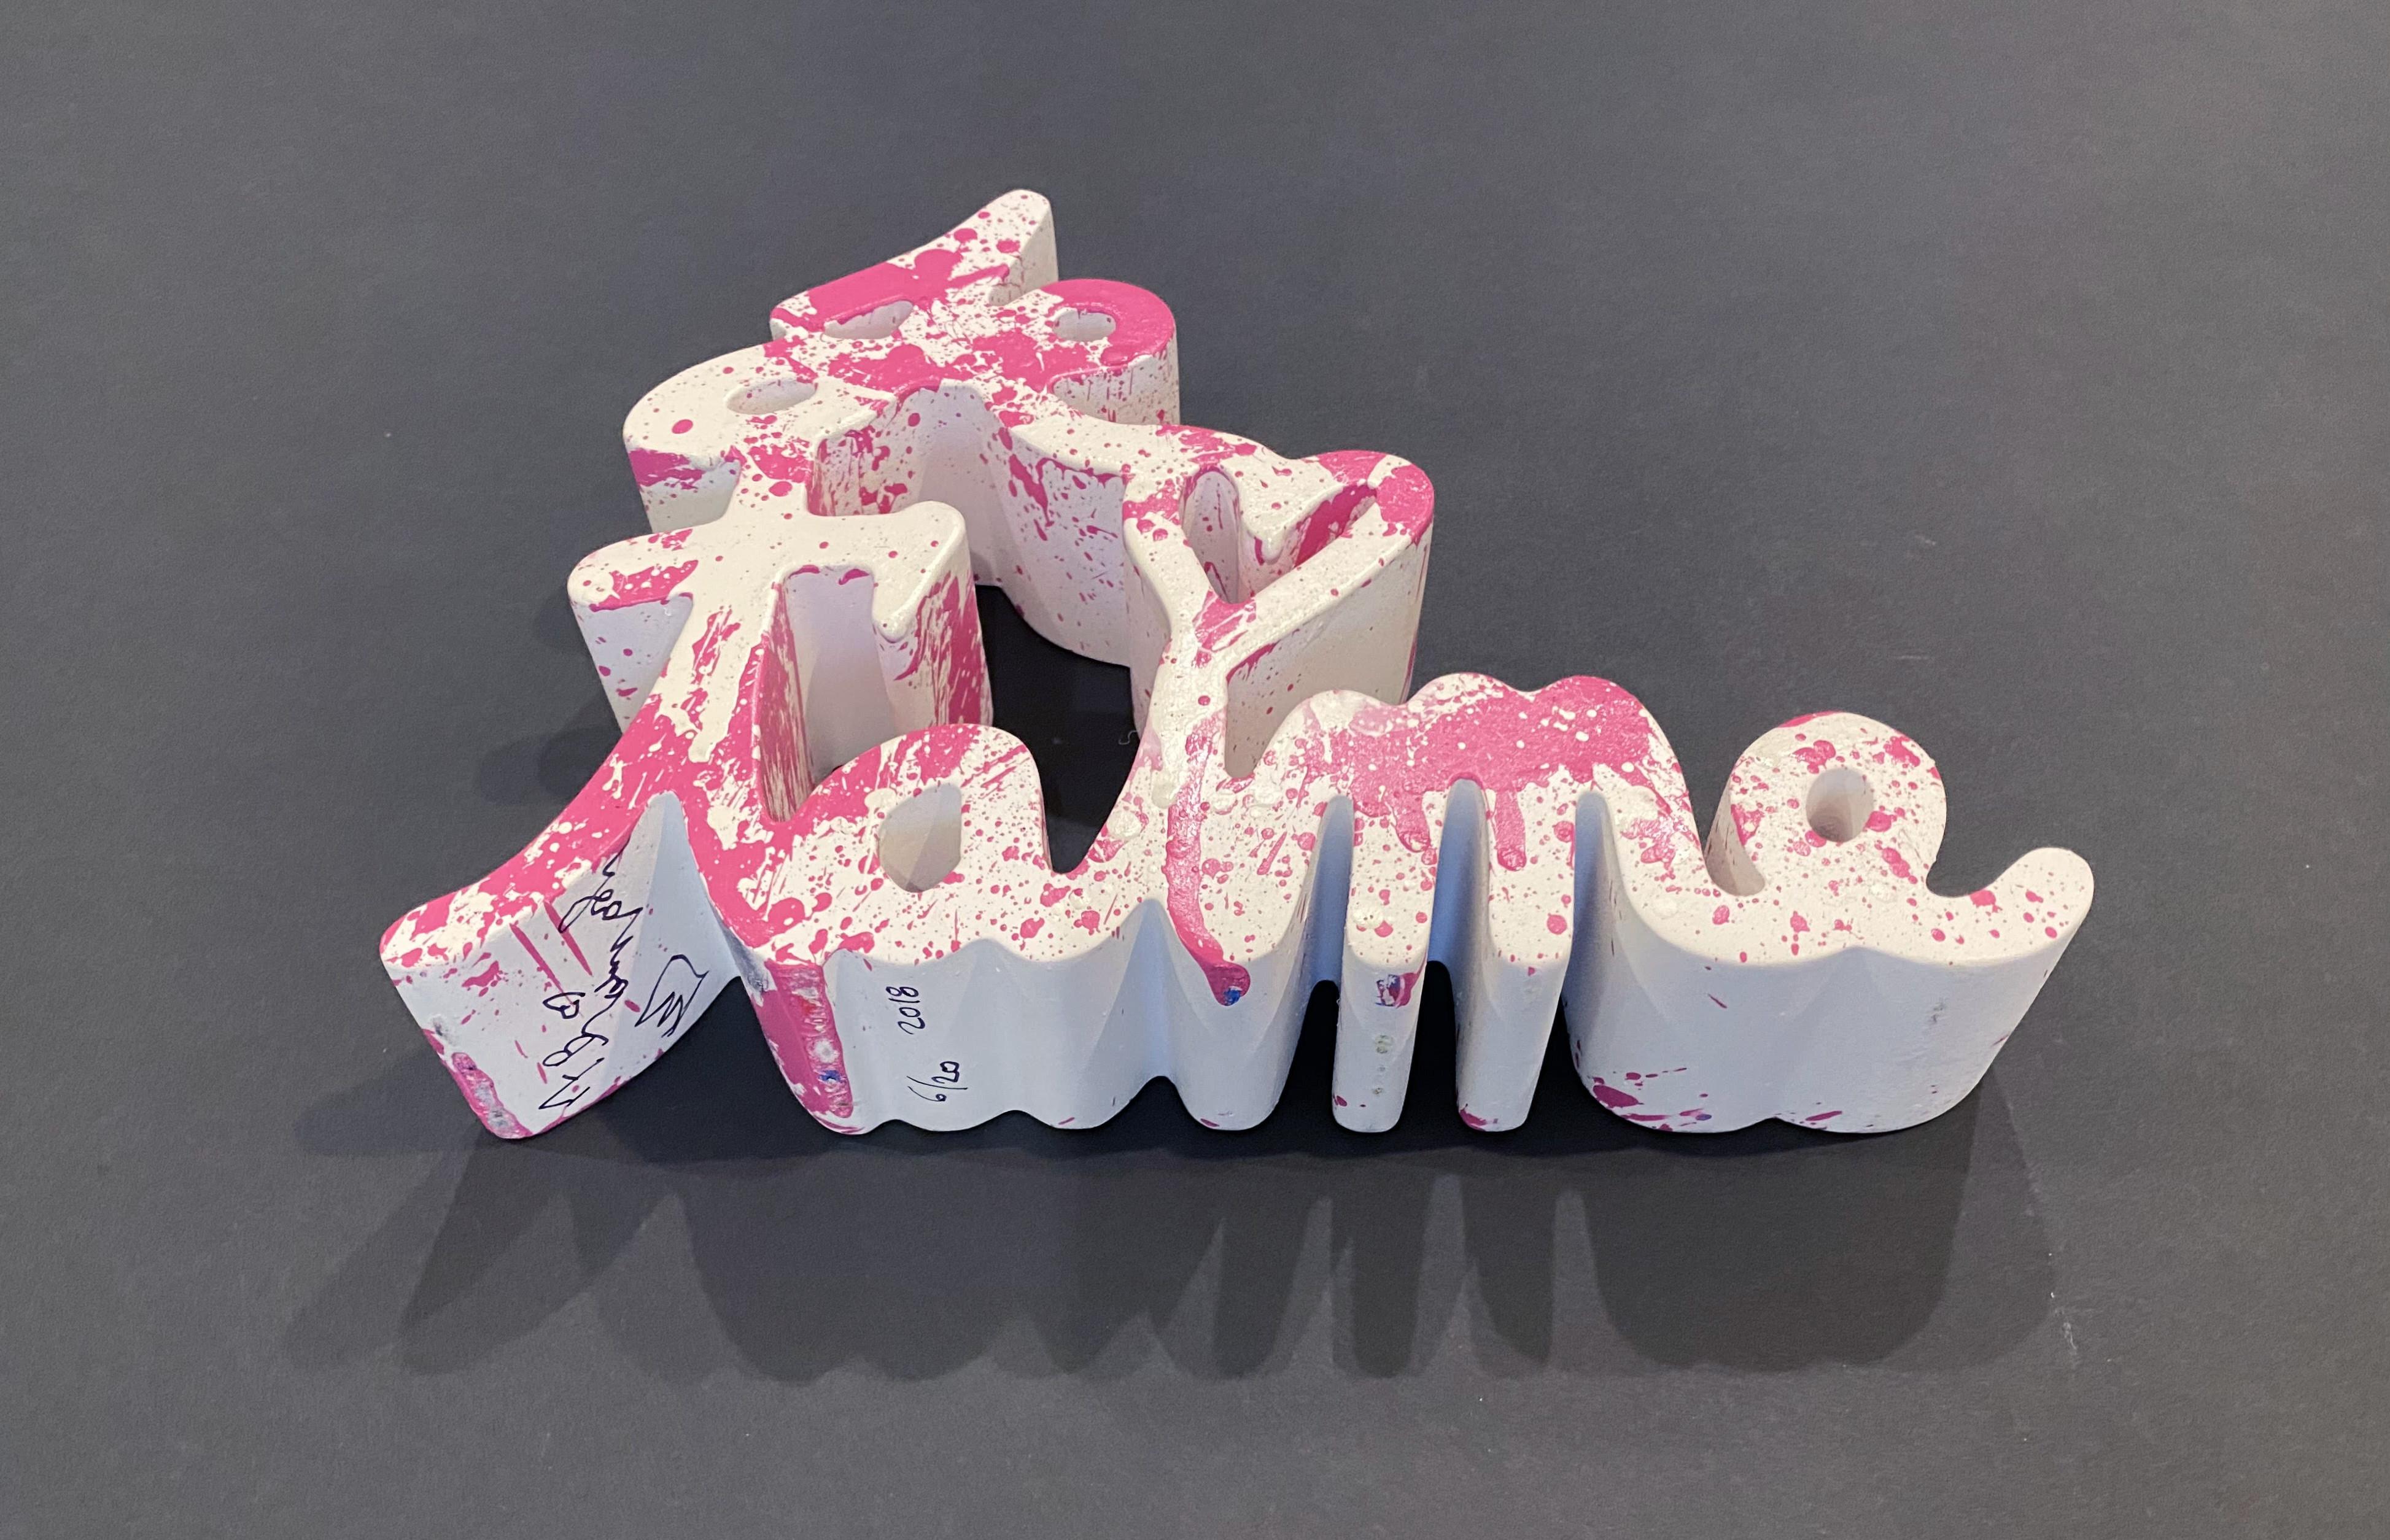 Je t'aime - Pink Splash - Pop Art Sculpture by Mr. Brainwash